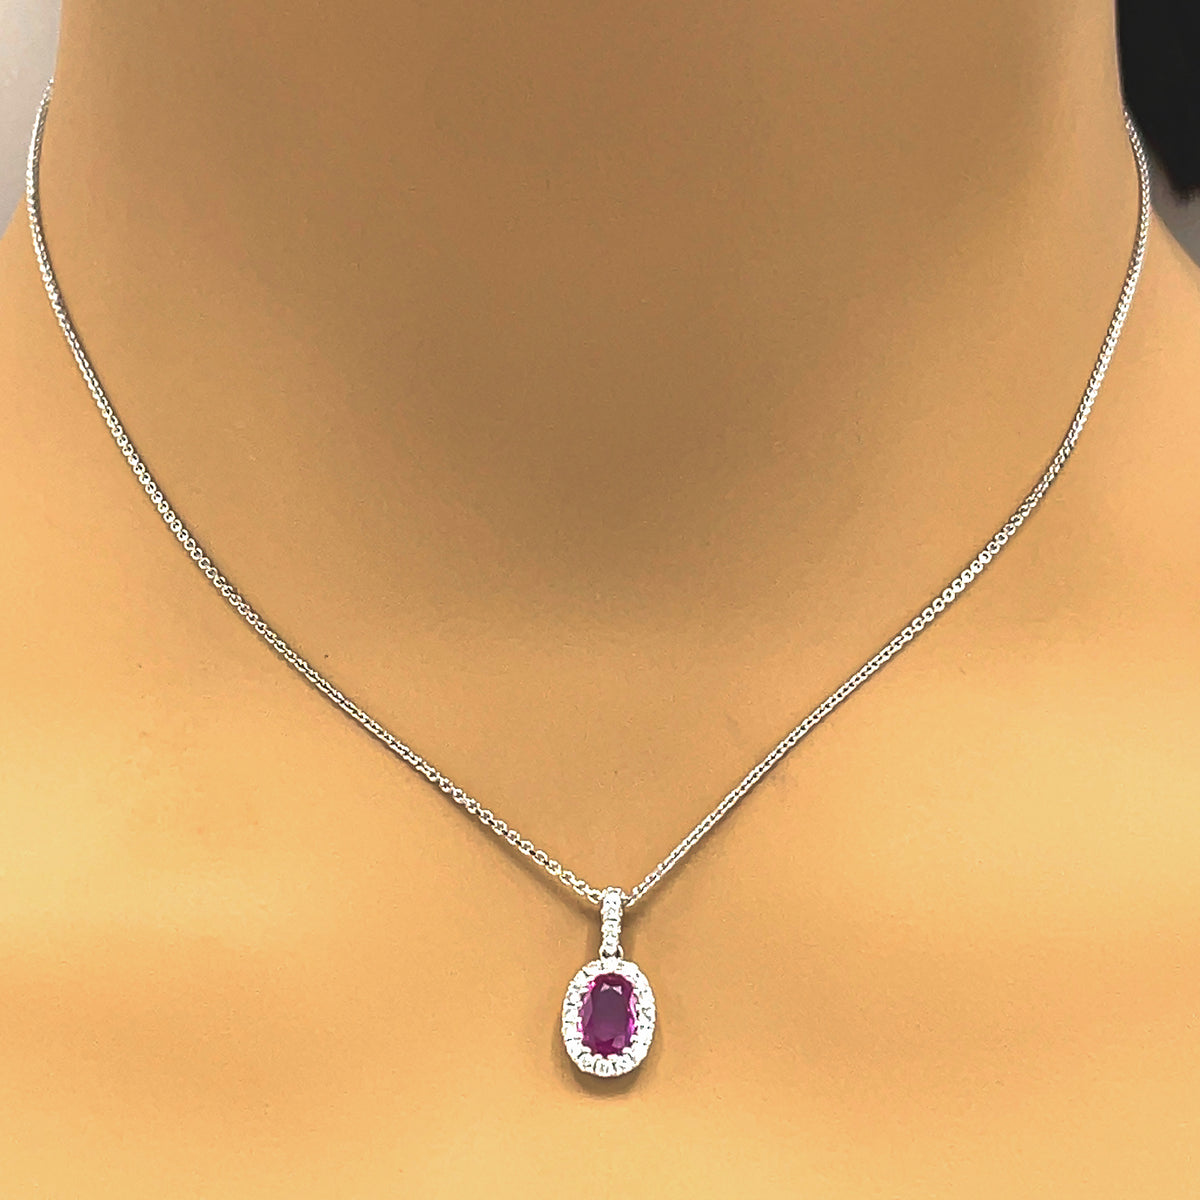 18K White Gold Diamond Pink Sapphire Pendant Necklace - modaselle